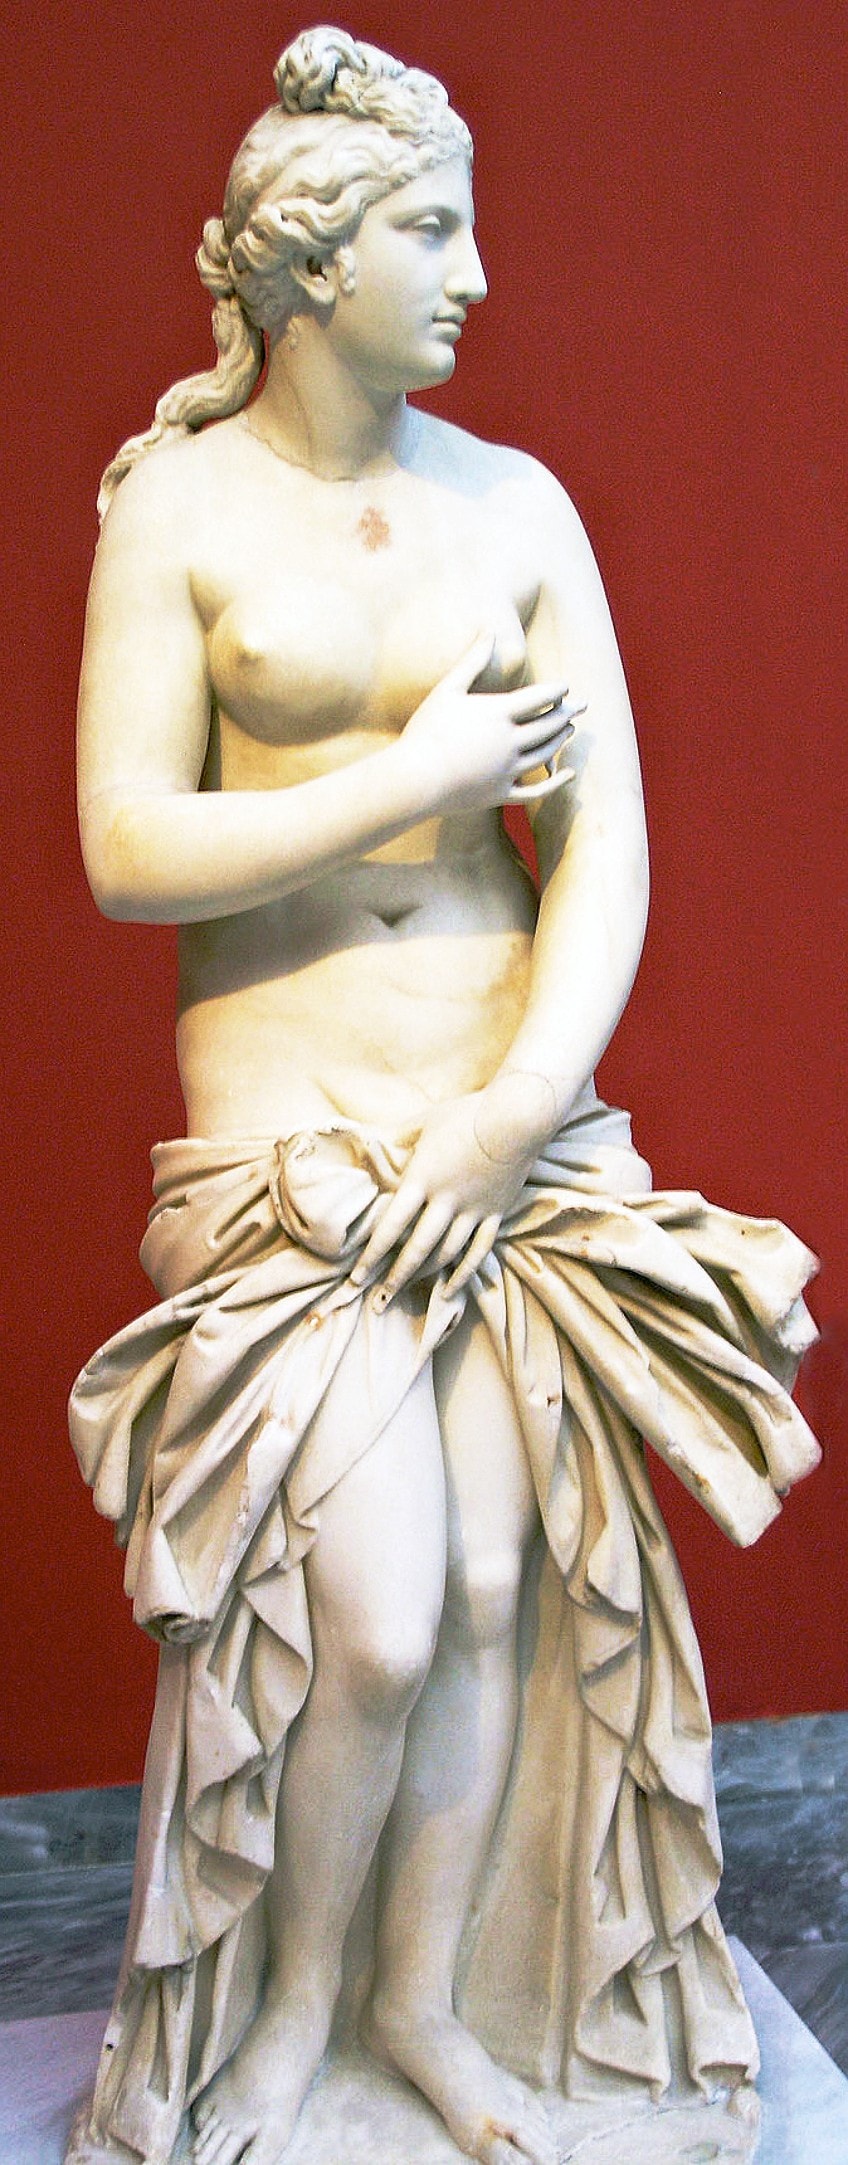 Who Is the Venus de Milo Sculpture Based On